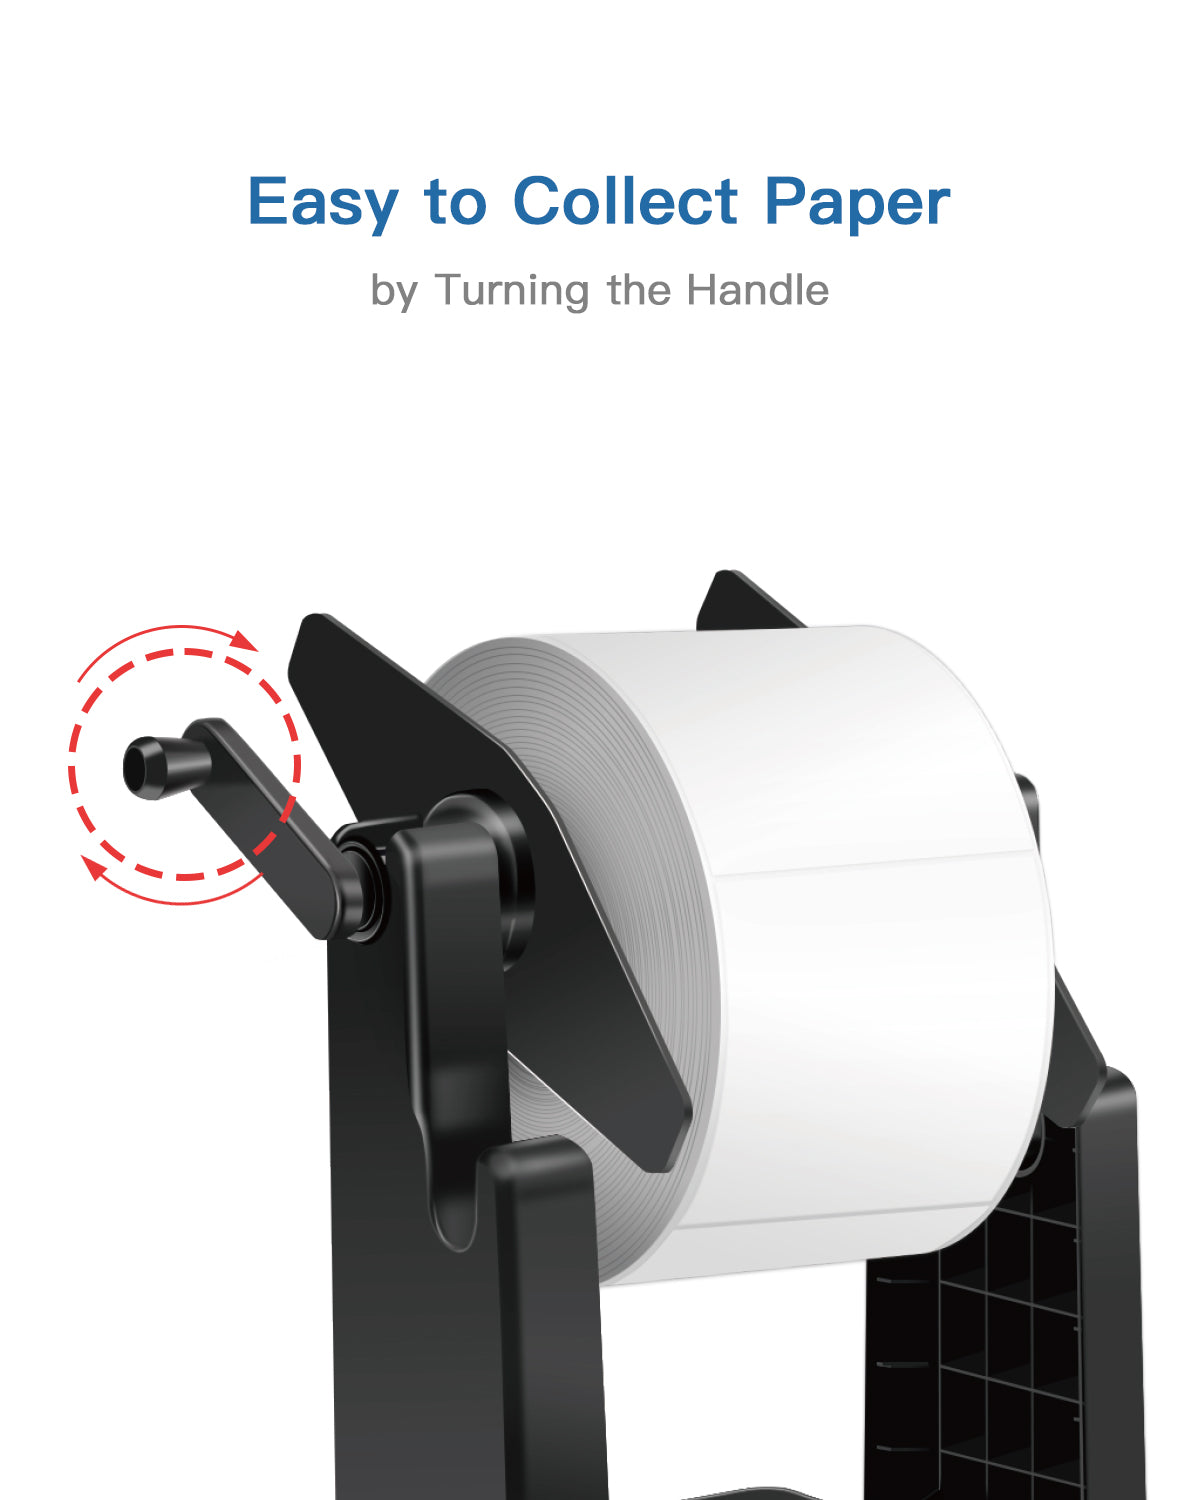 MUNBYN External Rolls Label Holder, 2 in 1 Fan-Fold Stack Paper Holder 